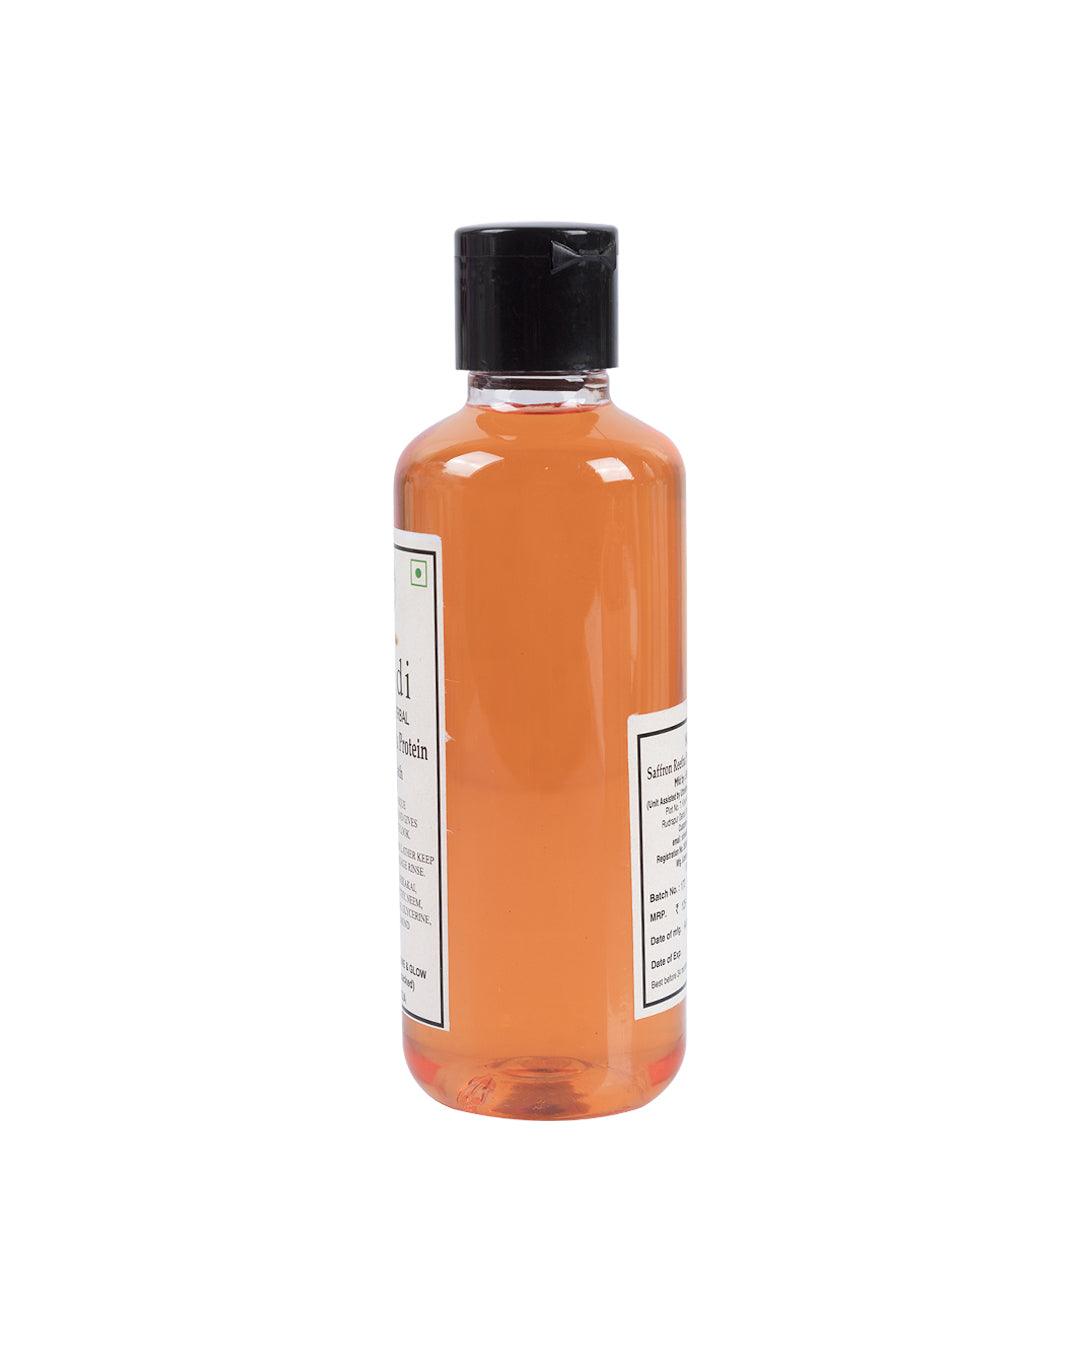 Khadi Saffron Reetha Protein Herbal Sath Shampoo, 210 mL - MARKET 99